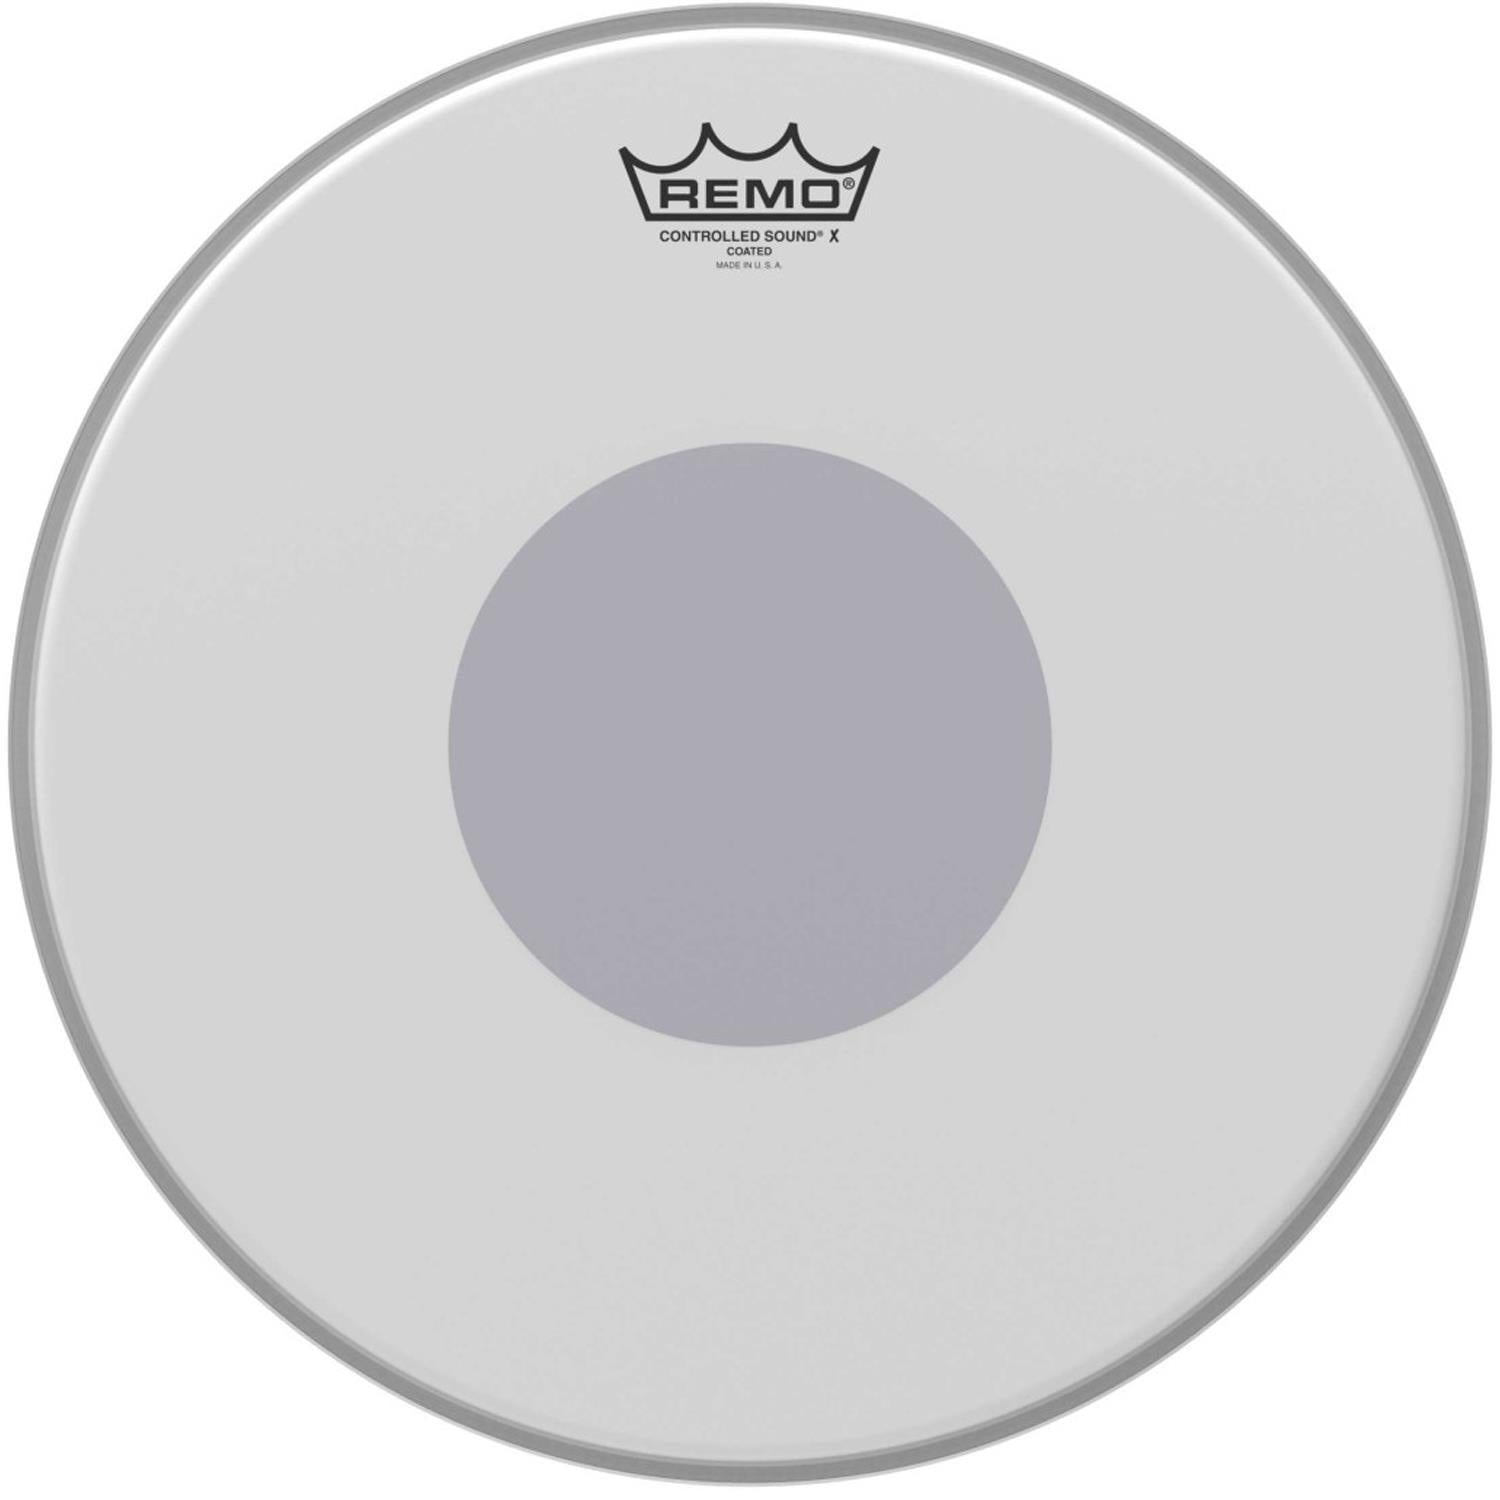 Remo CX-0114-10 14" Controlled Sound X Snare Drum Head - DY Pro Audio